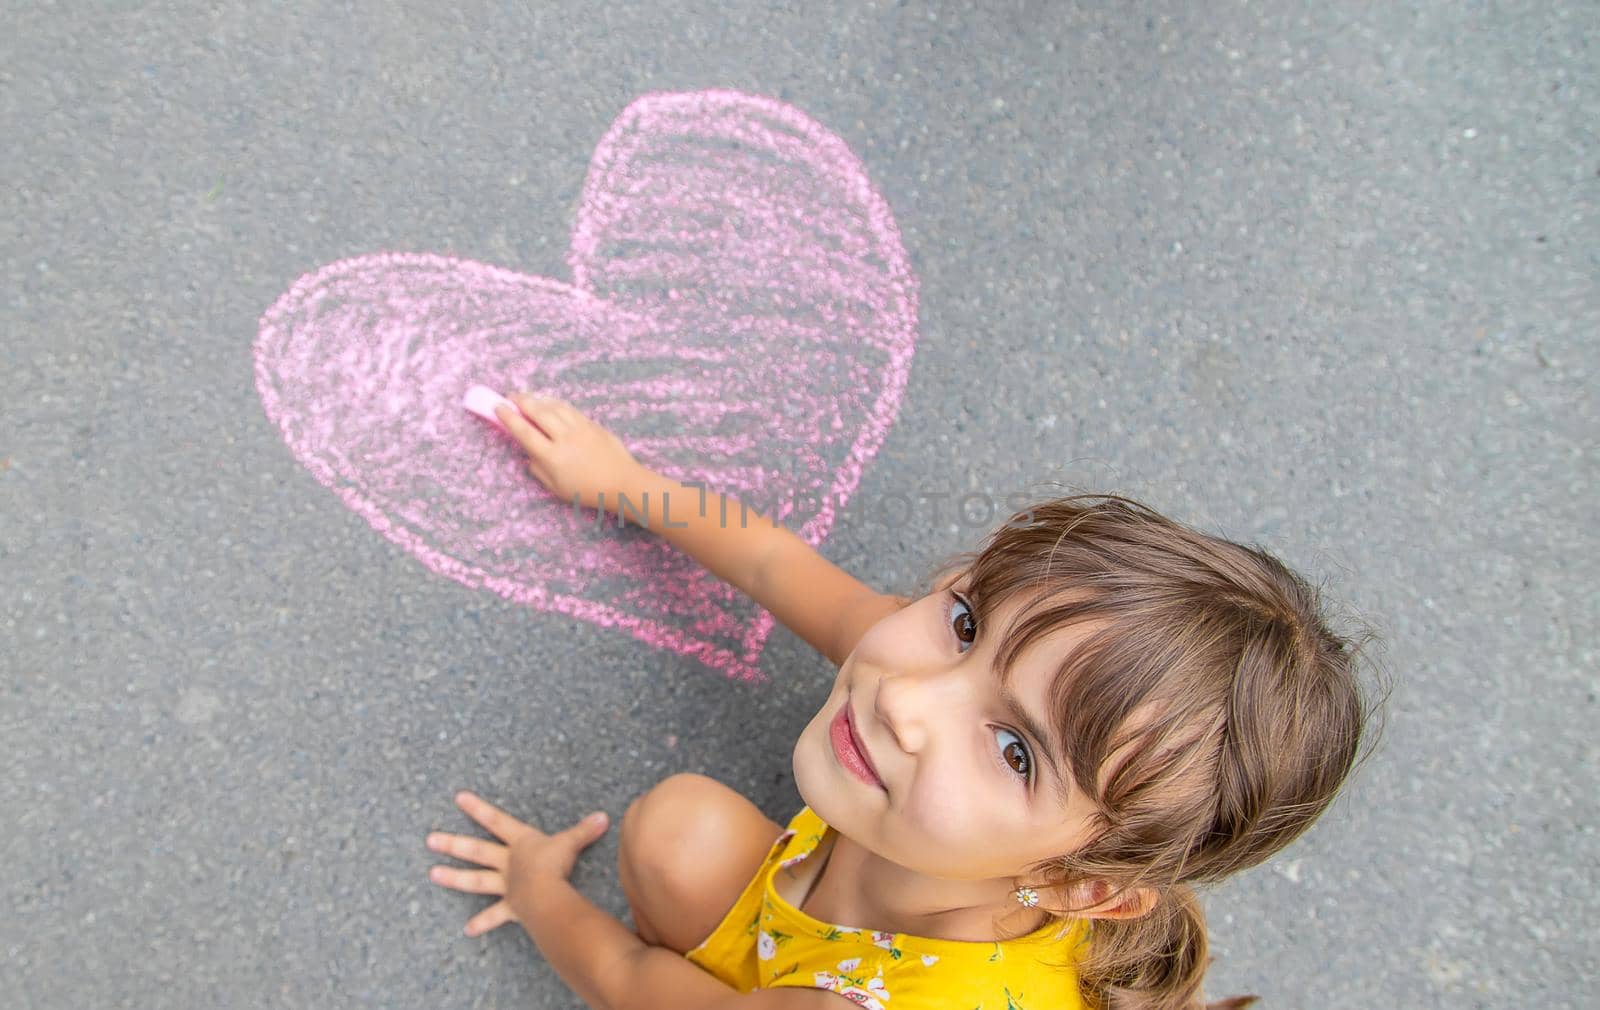 The child draws a heart on the asphalt with chalk. Selective focus. by yanadjana